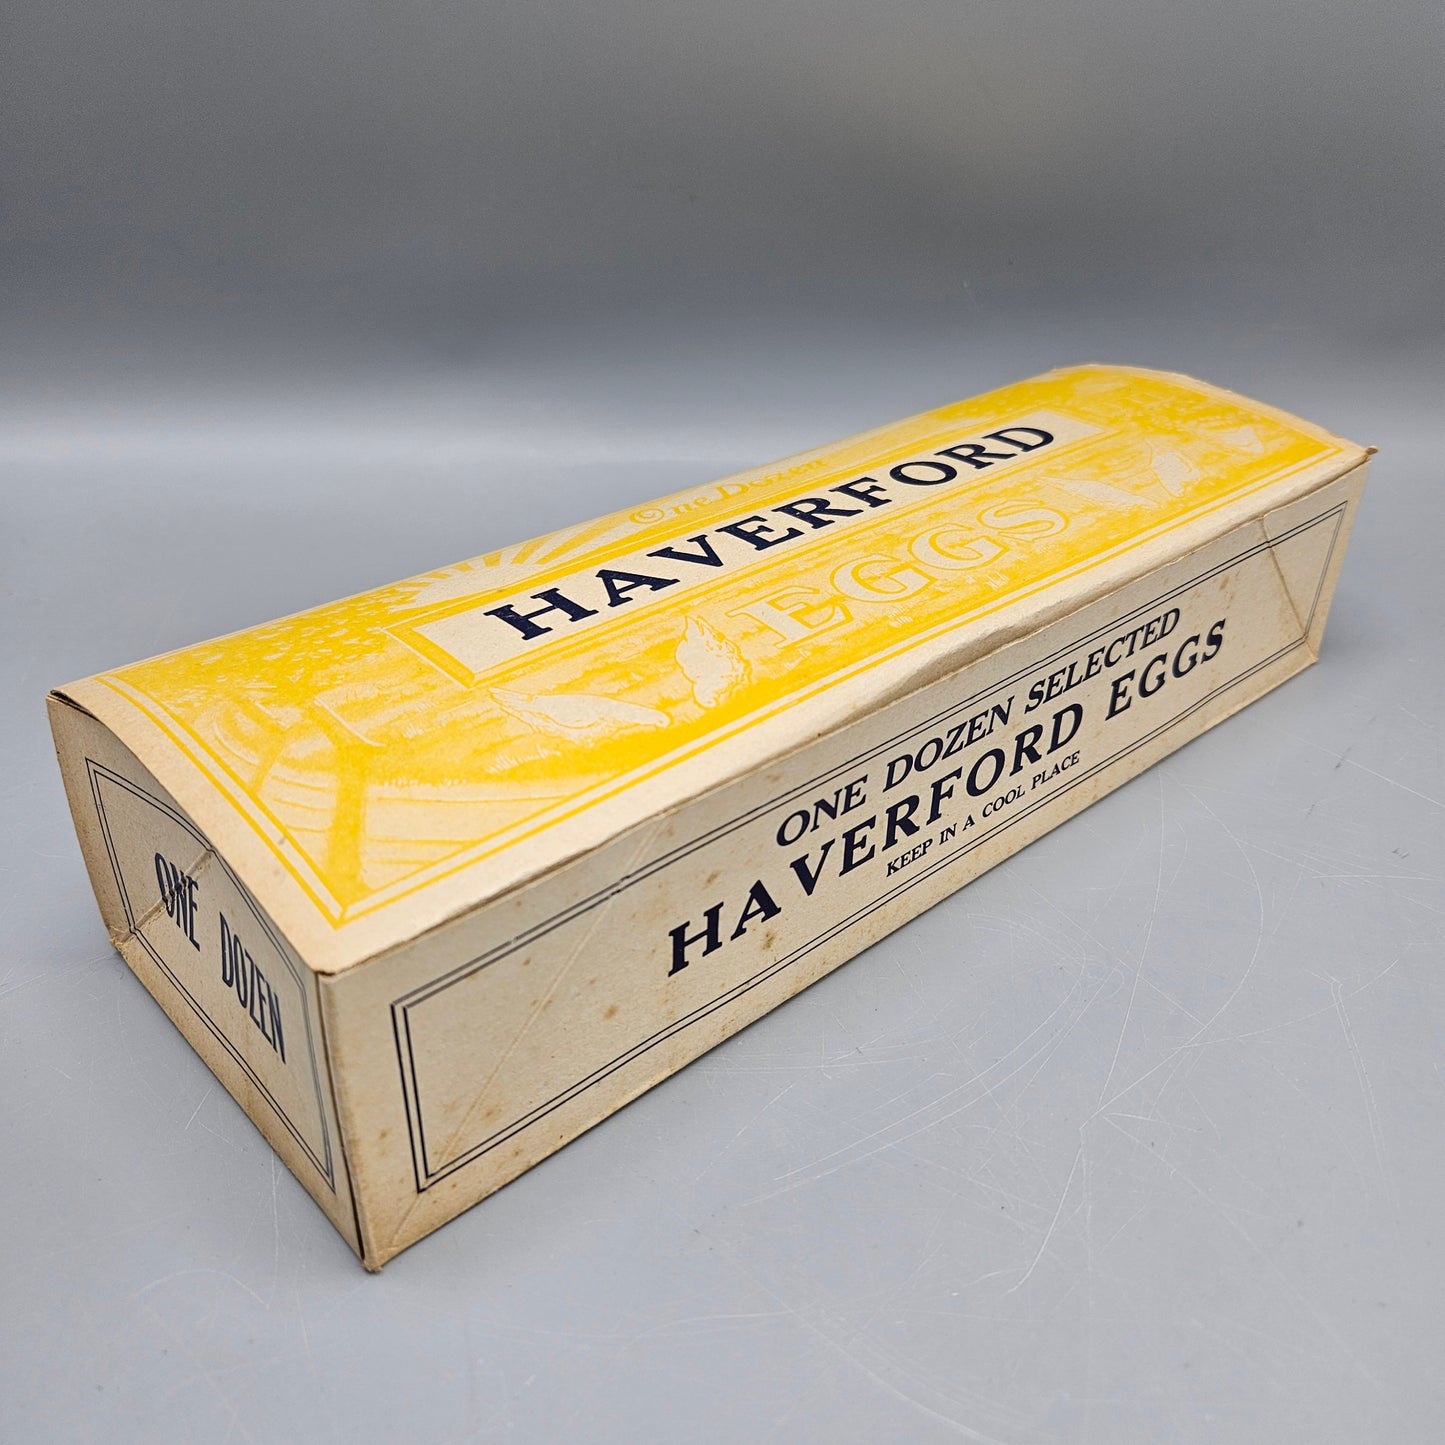 Vintage Haverford Eggs Box - Erb & Zaring Co.